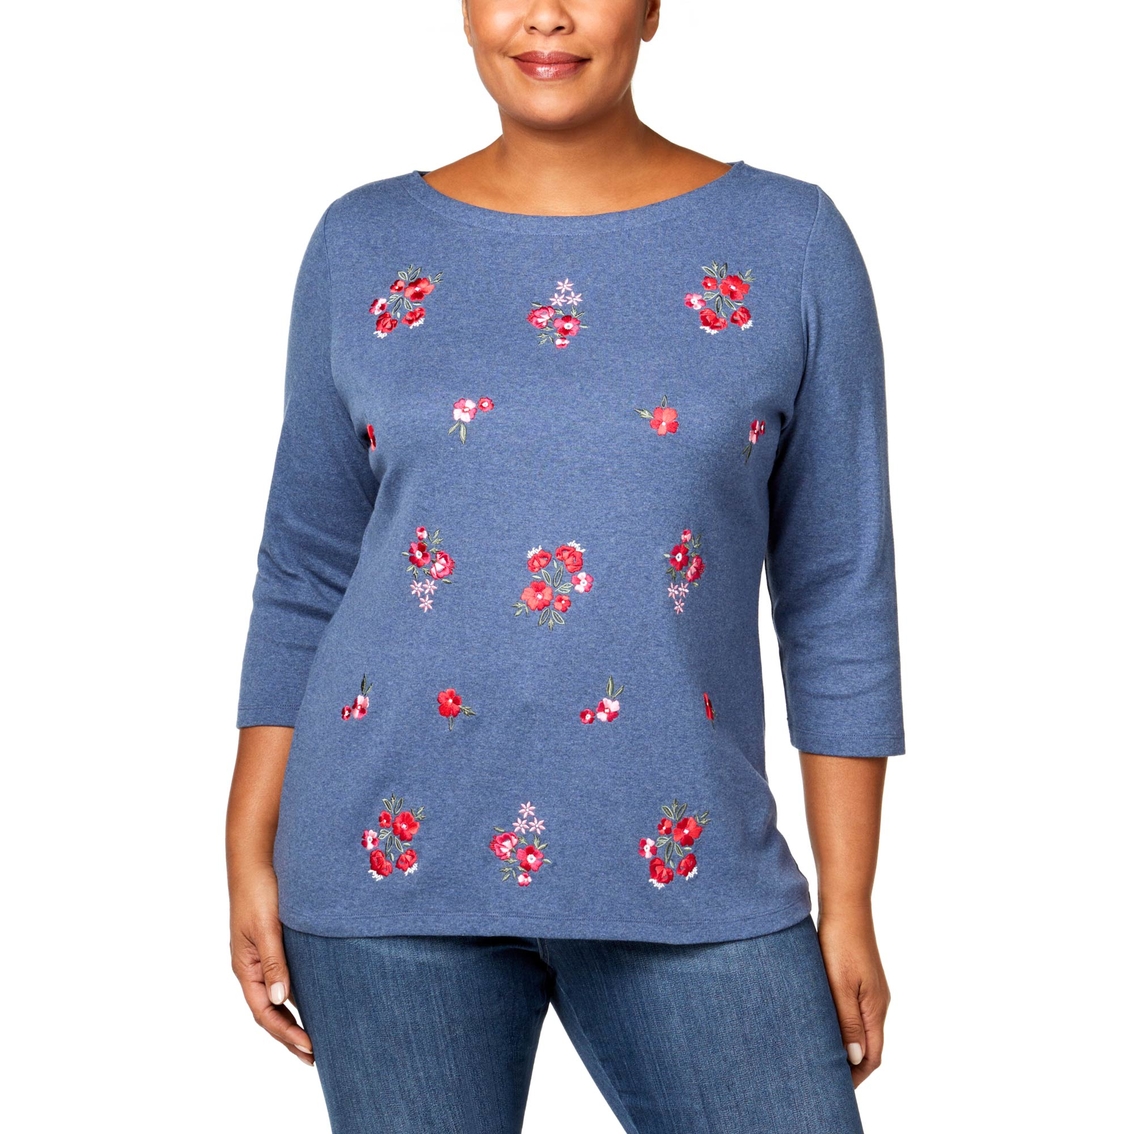 Karen Scott Plus Size Cotton Embroidered Top | Tops | Clothing ...